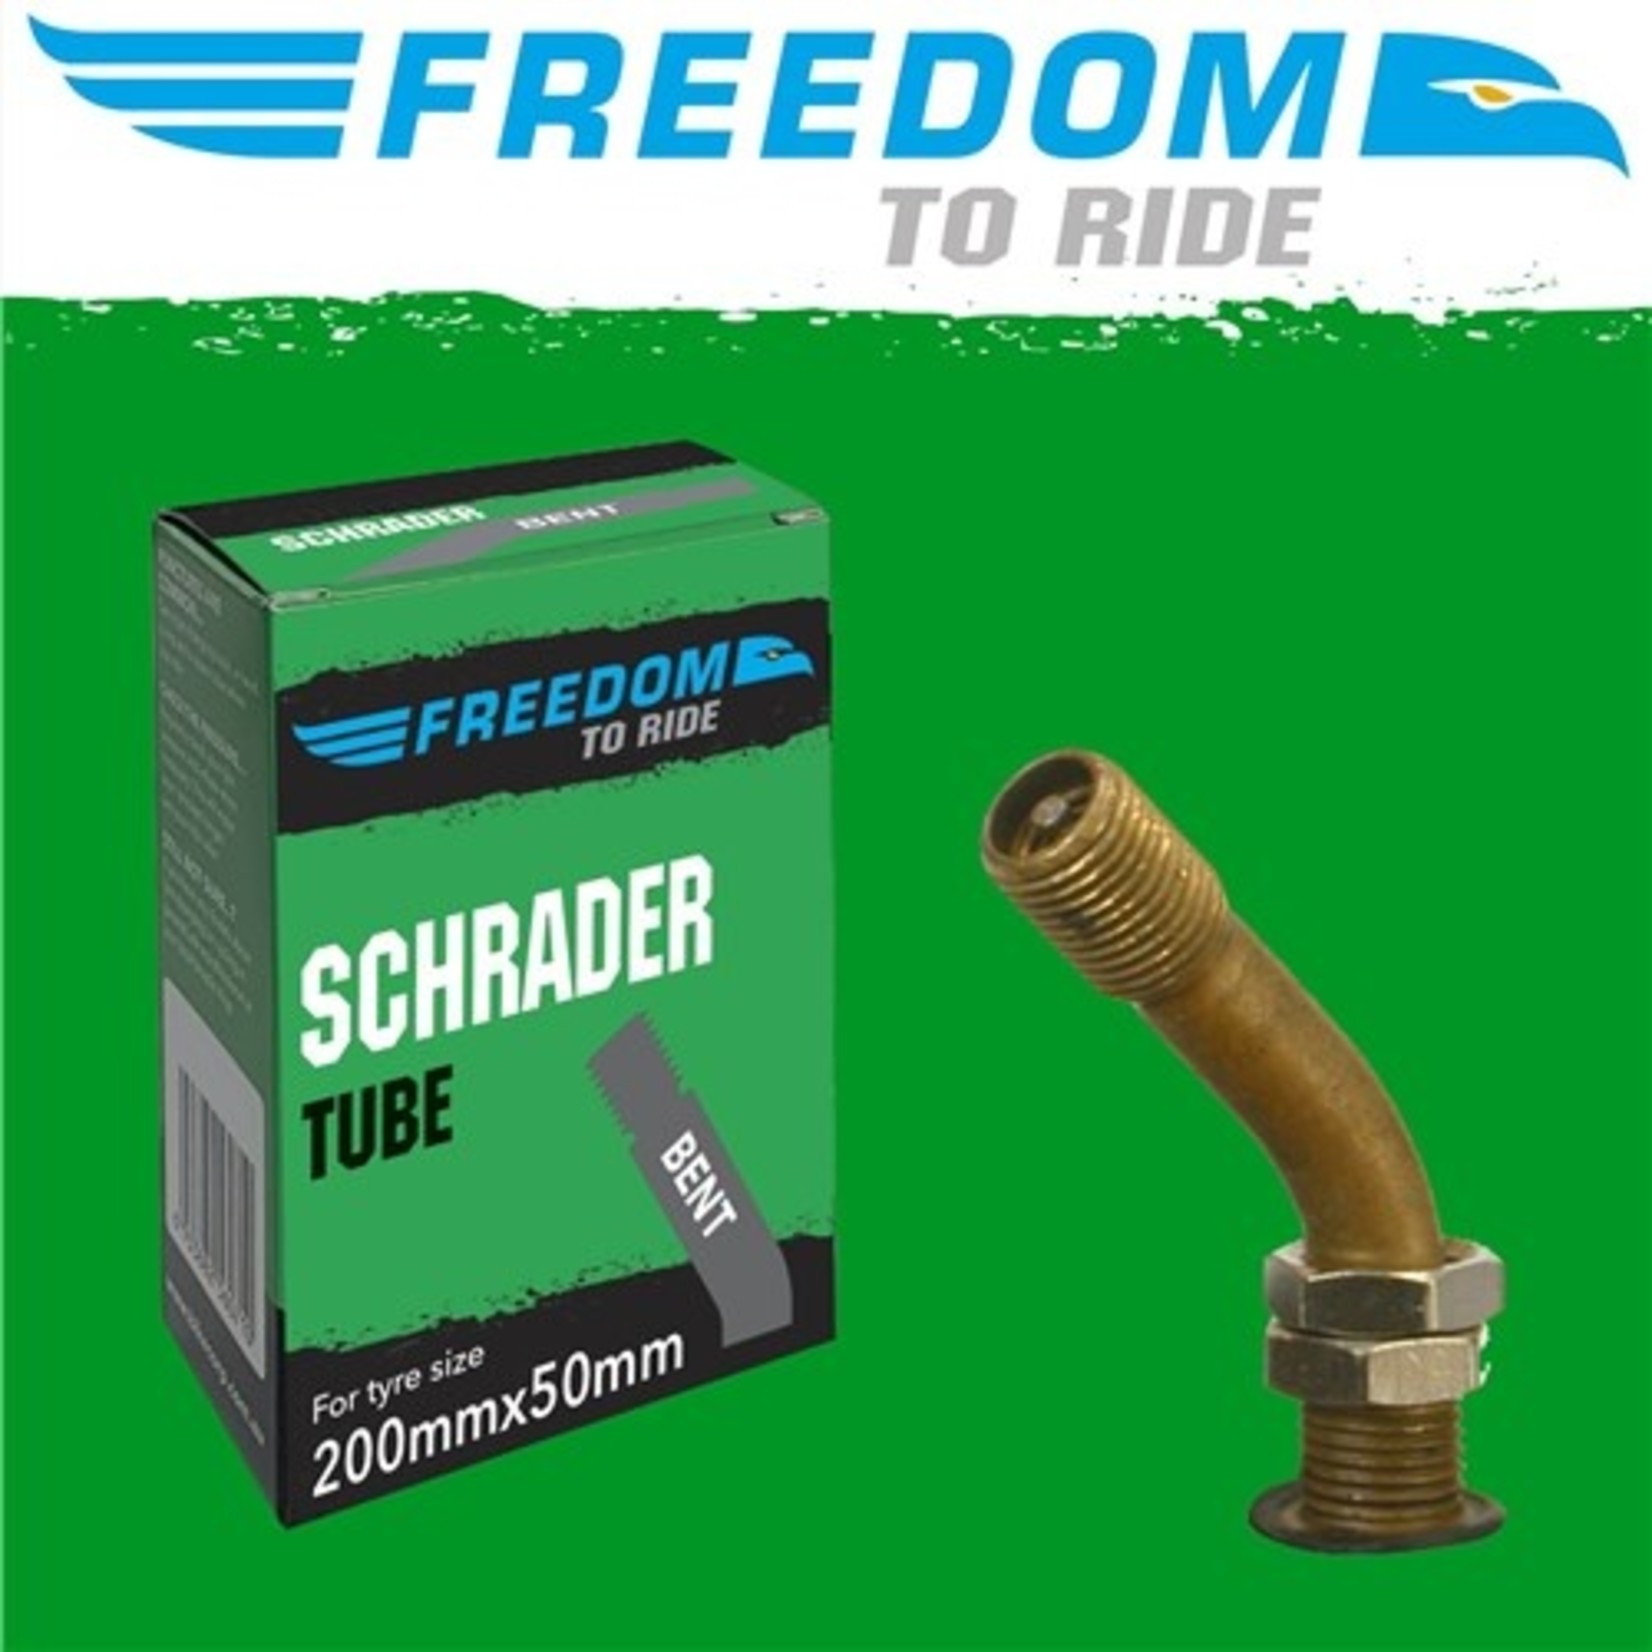 Freedom Freedom Bike Tube - 200mm X 50mm - Schrader Bent Valve - Pack of 2